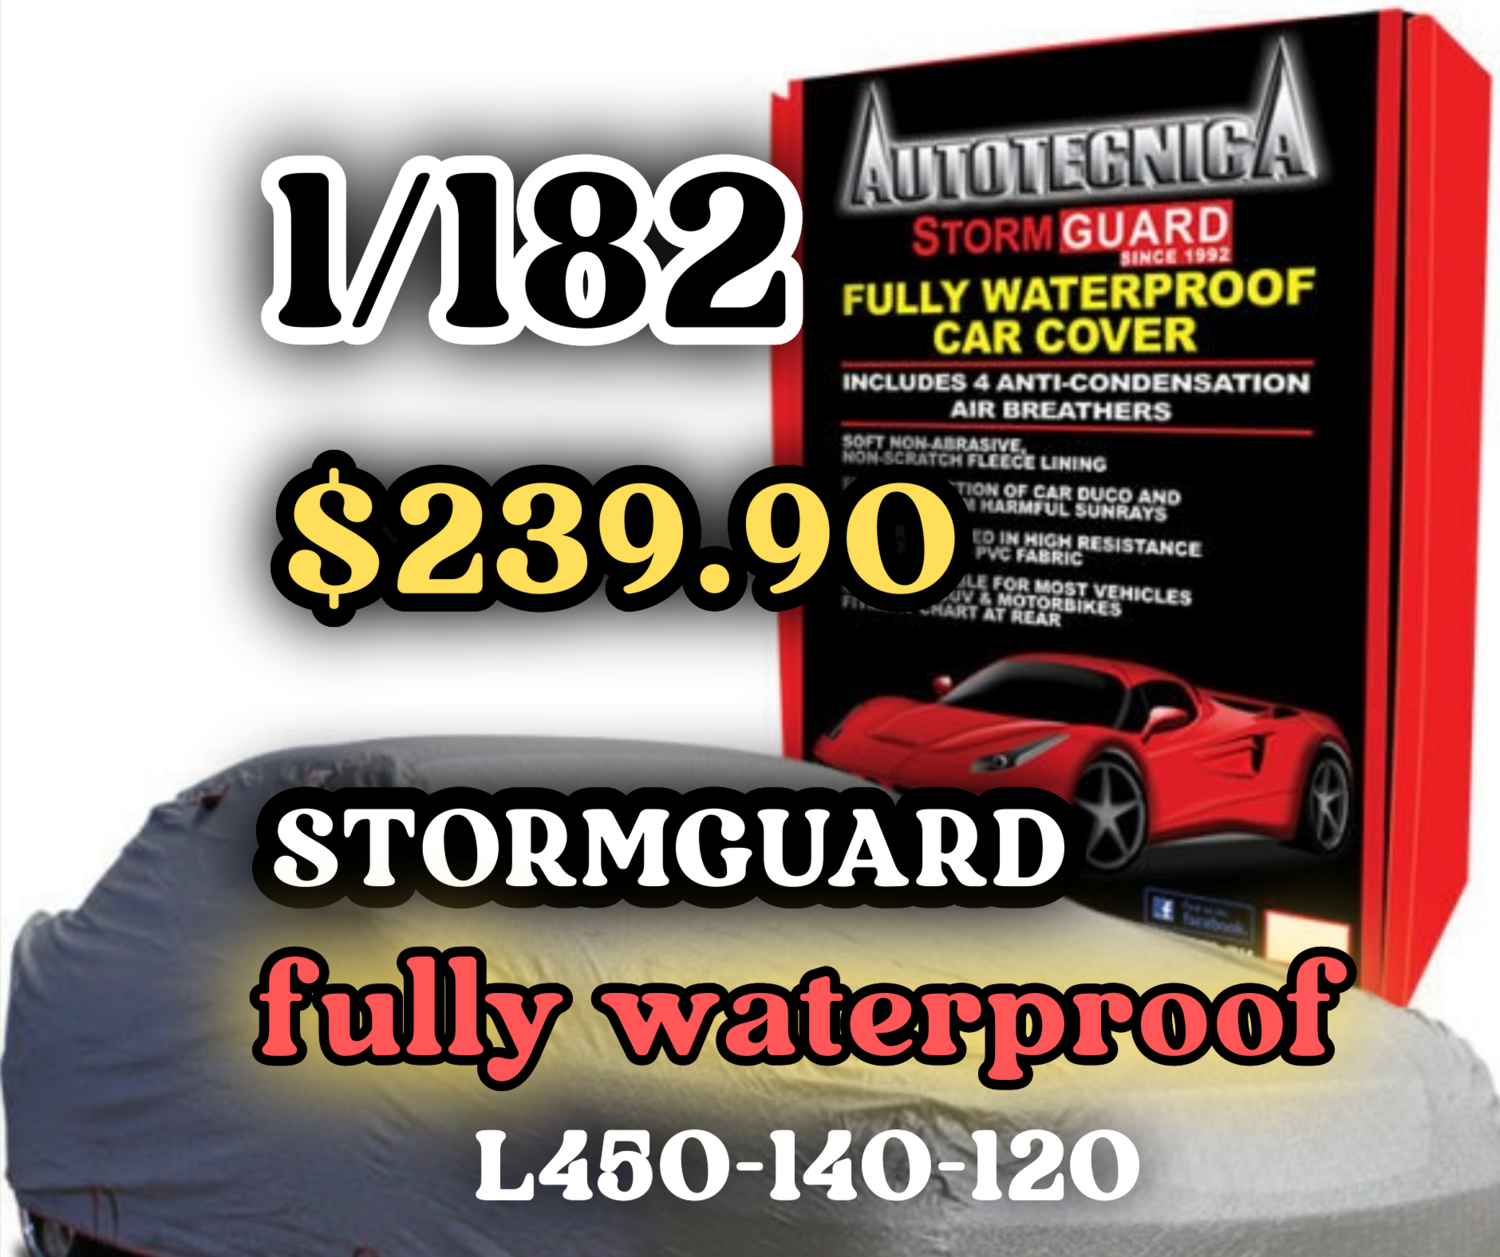 fully waterproof 1/182 Stormguard  Car Cover free  postage $239.90